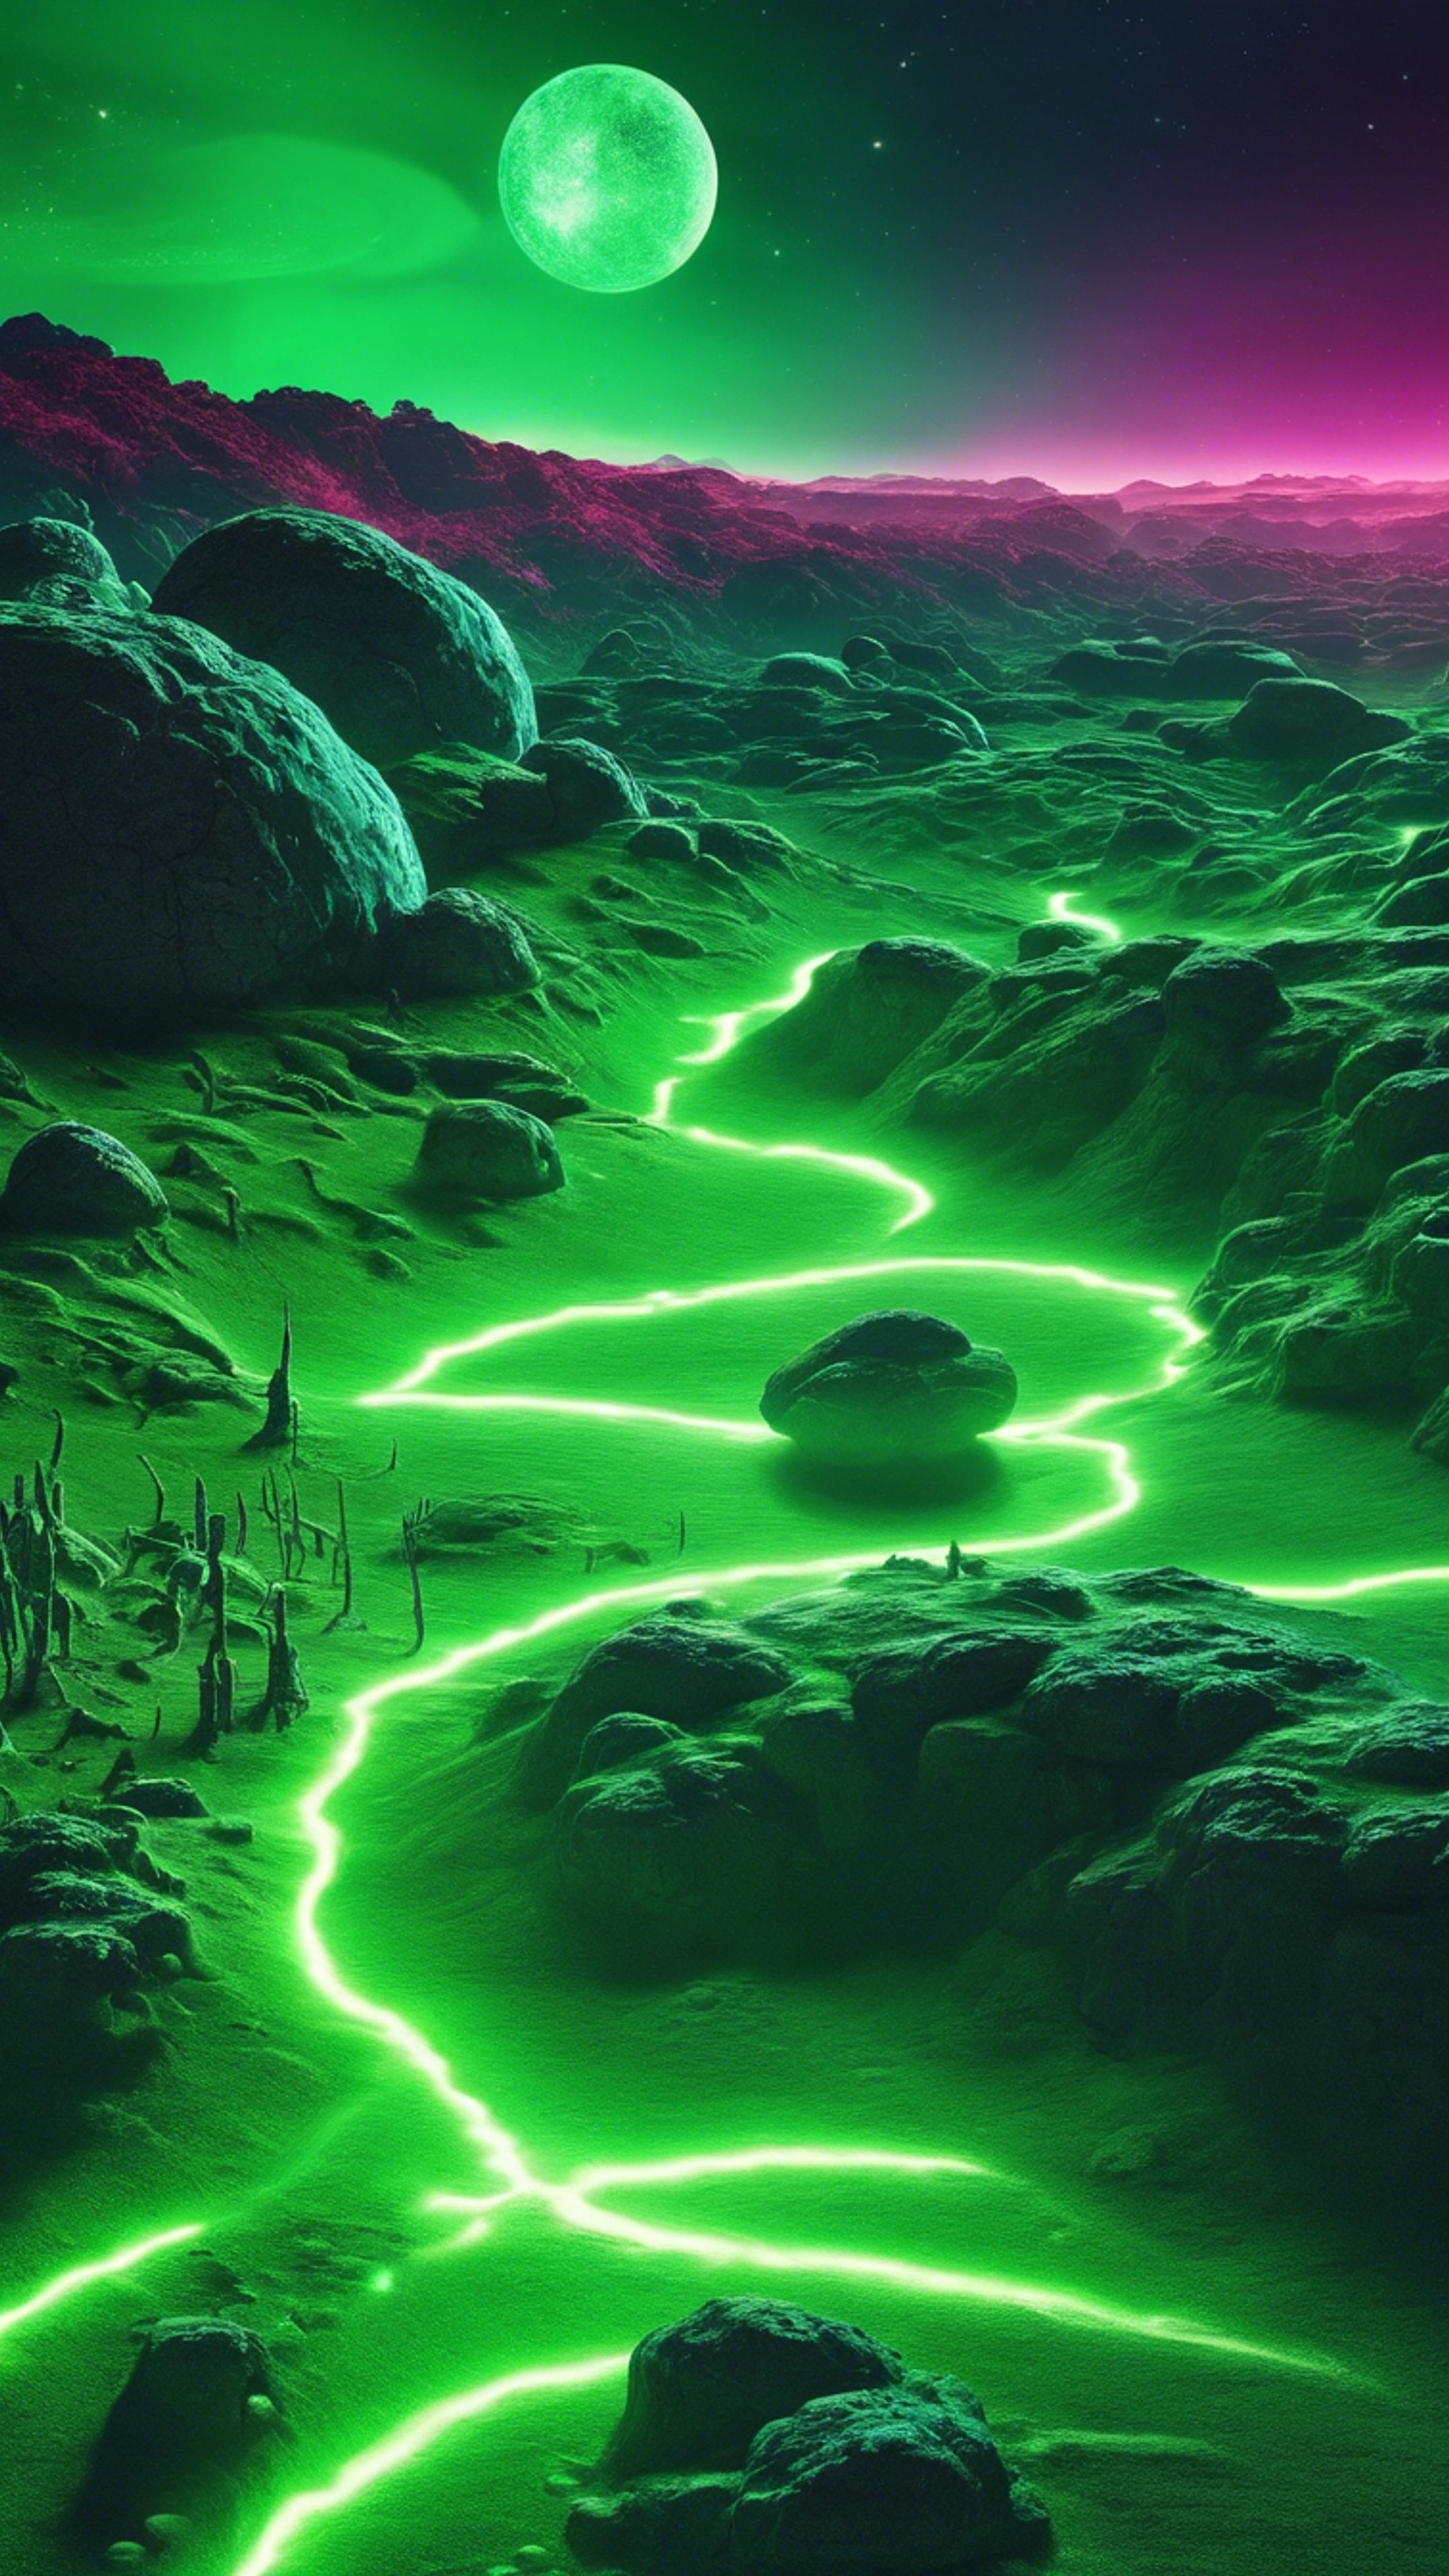 An alien planet landscape illuminated with cool neon green light. Tapeta[c1d7fd56055c47ca89e3]